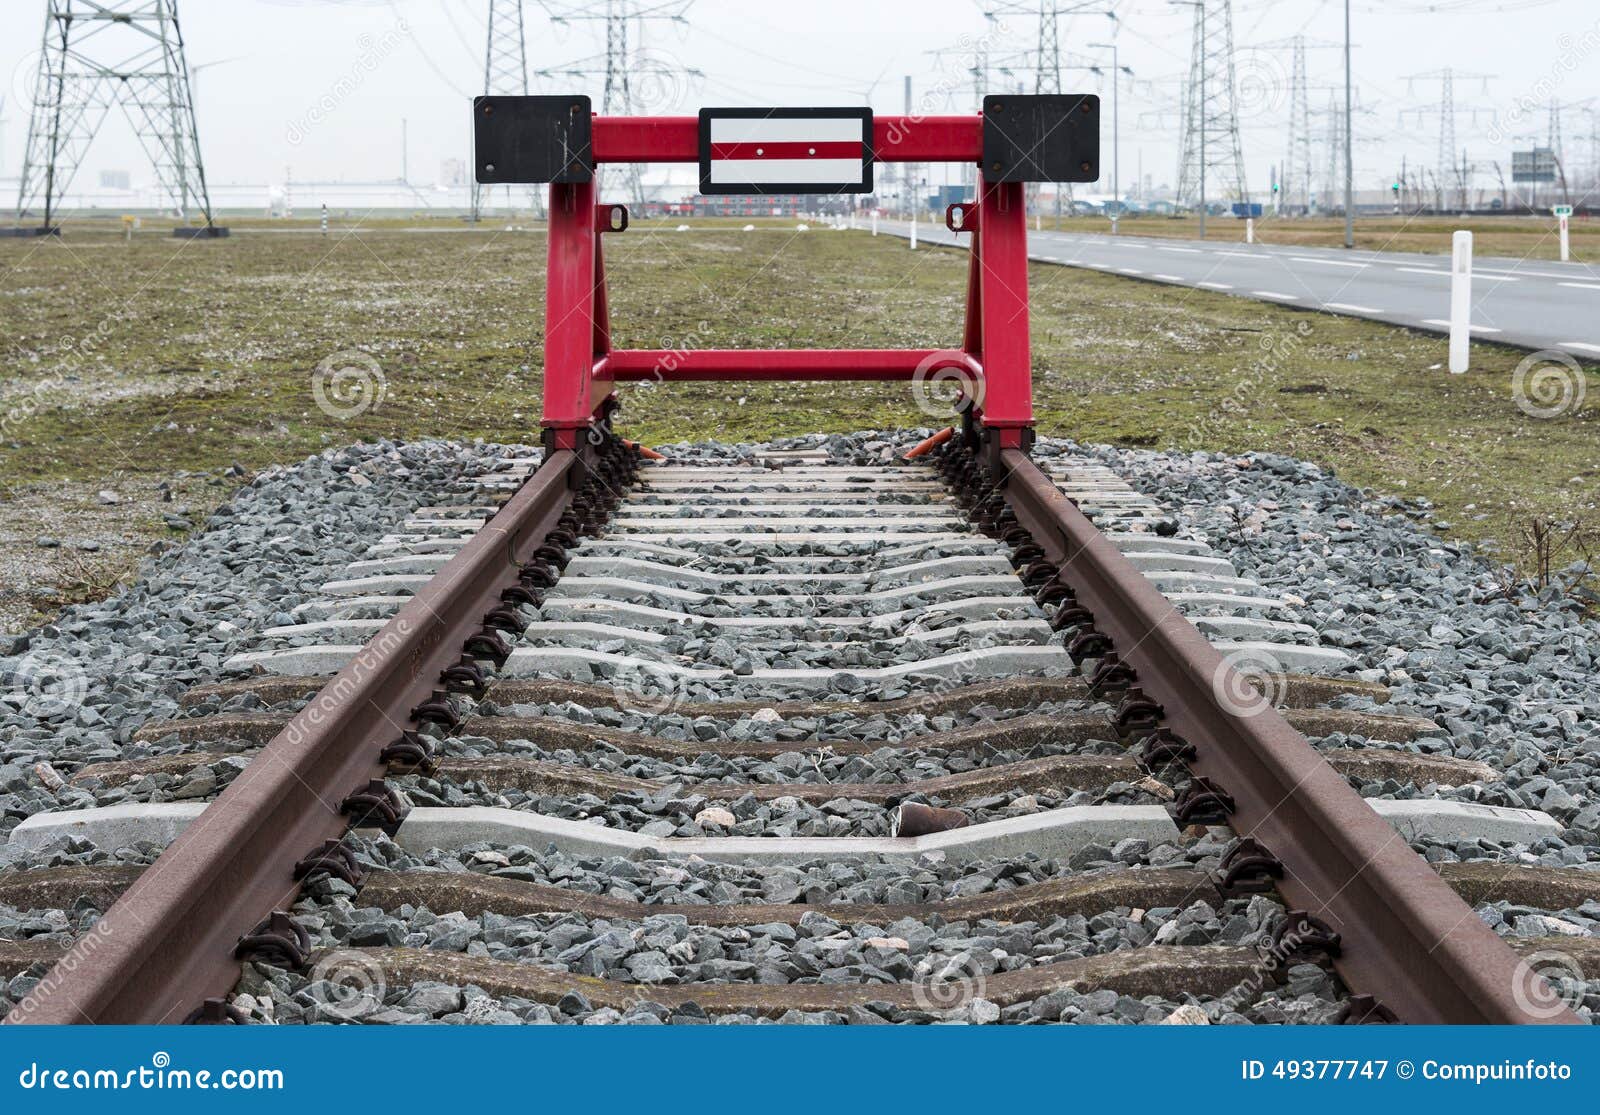 red railroad buffer